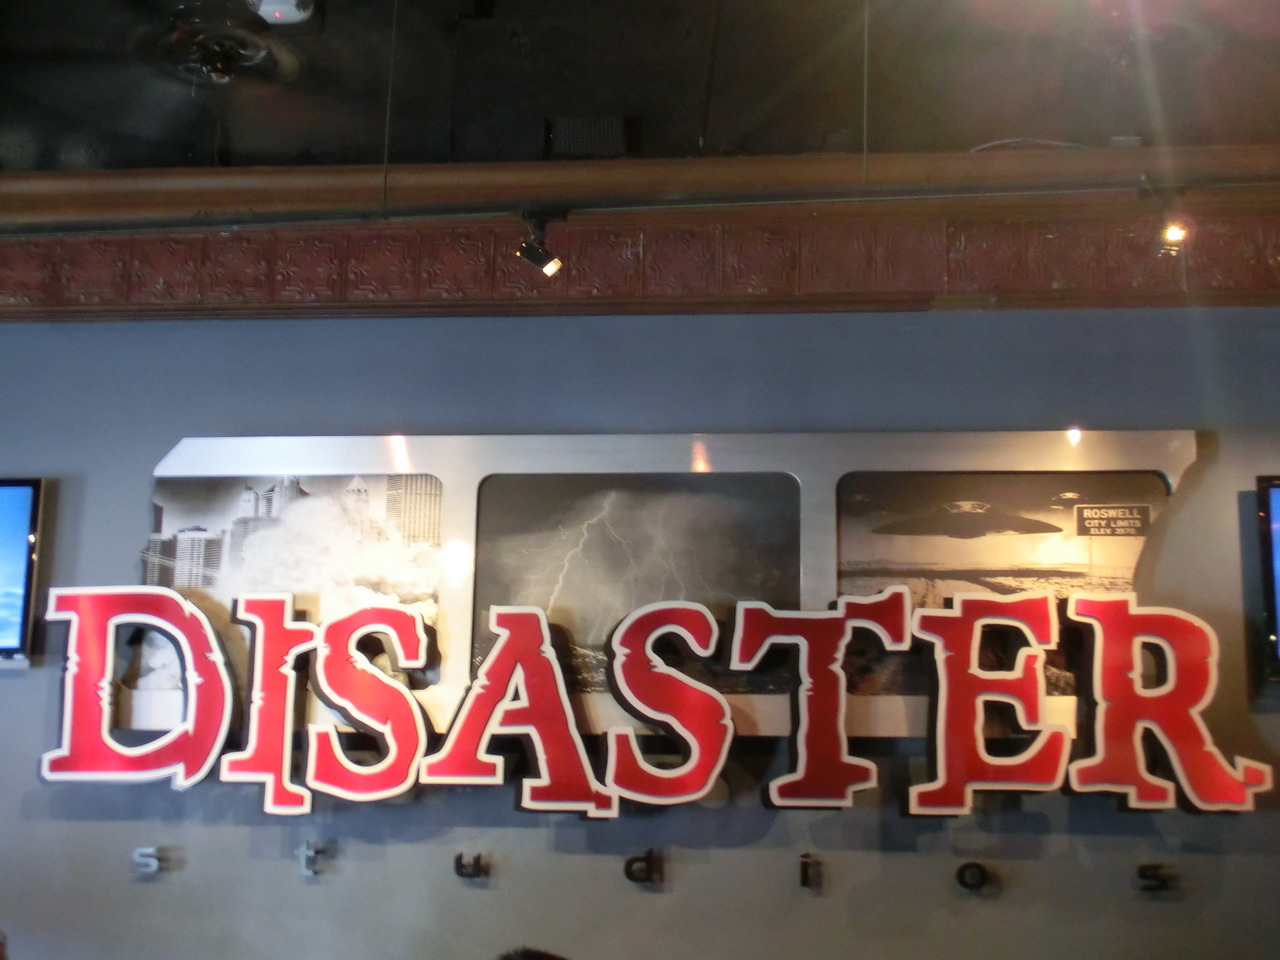 Disaster! Logo am Eingang zur Attraktion.